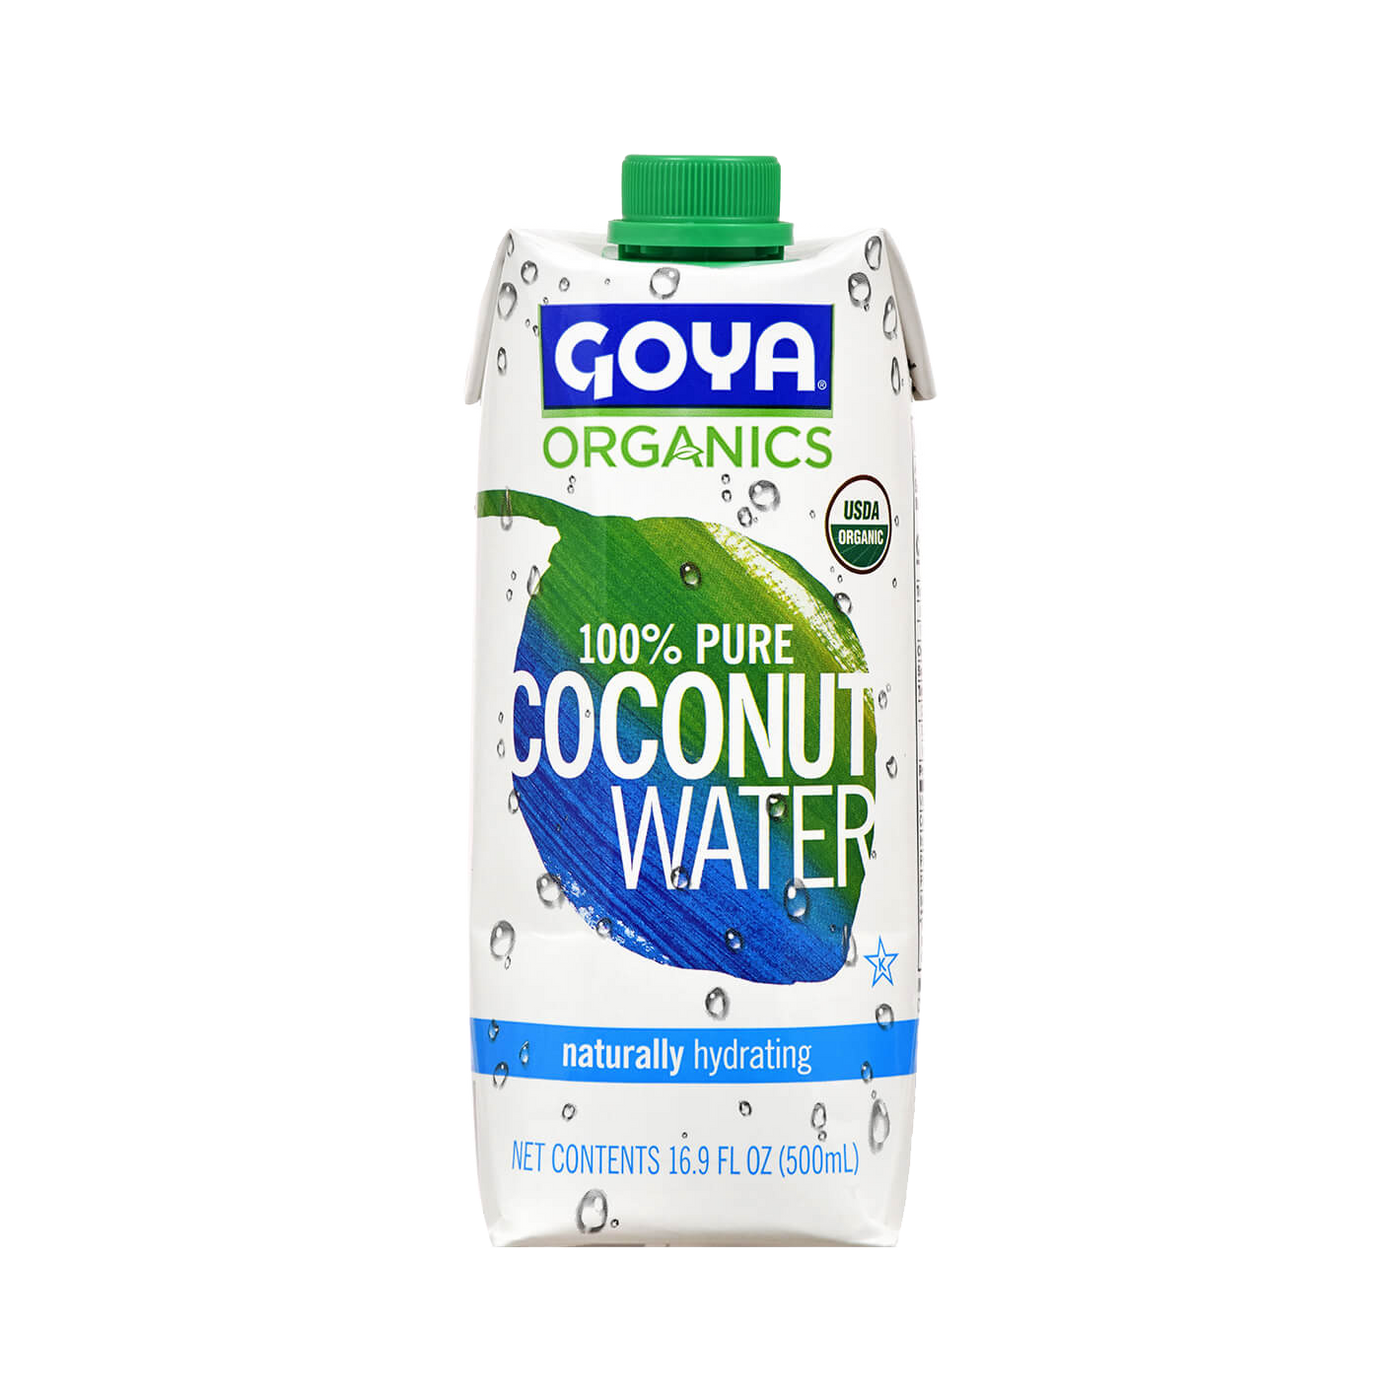   Goya Organic Coconut Water